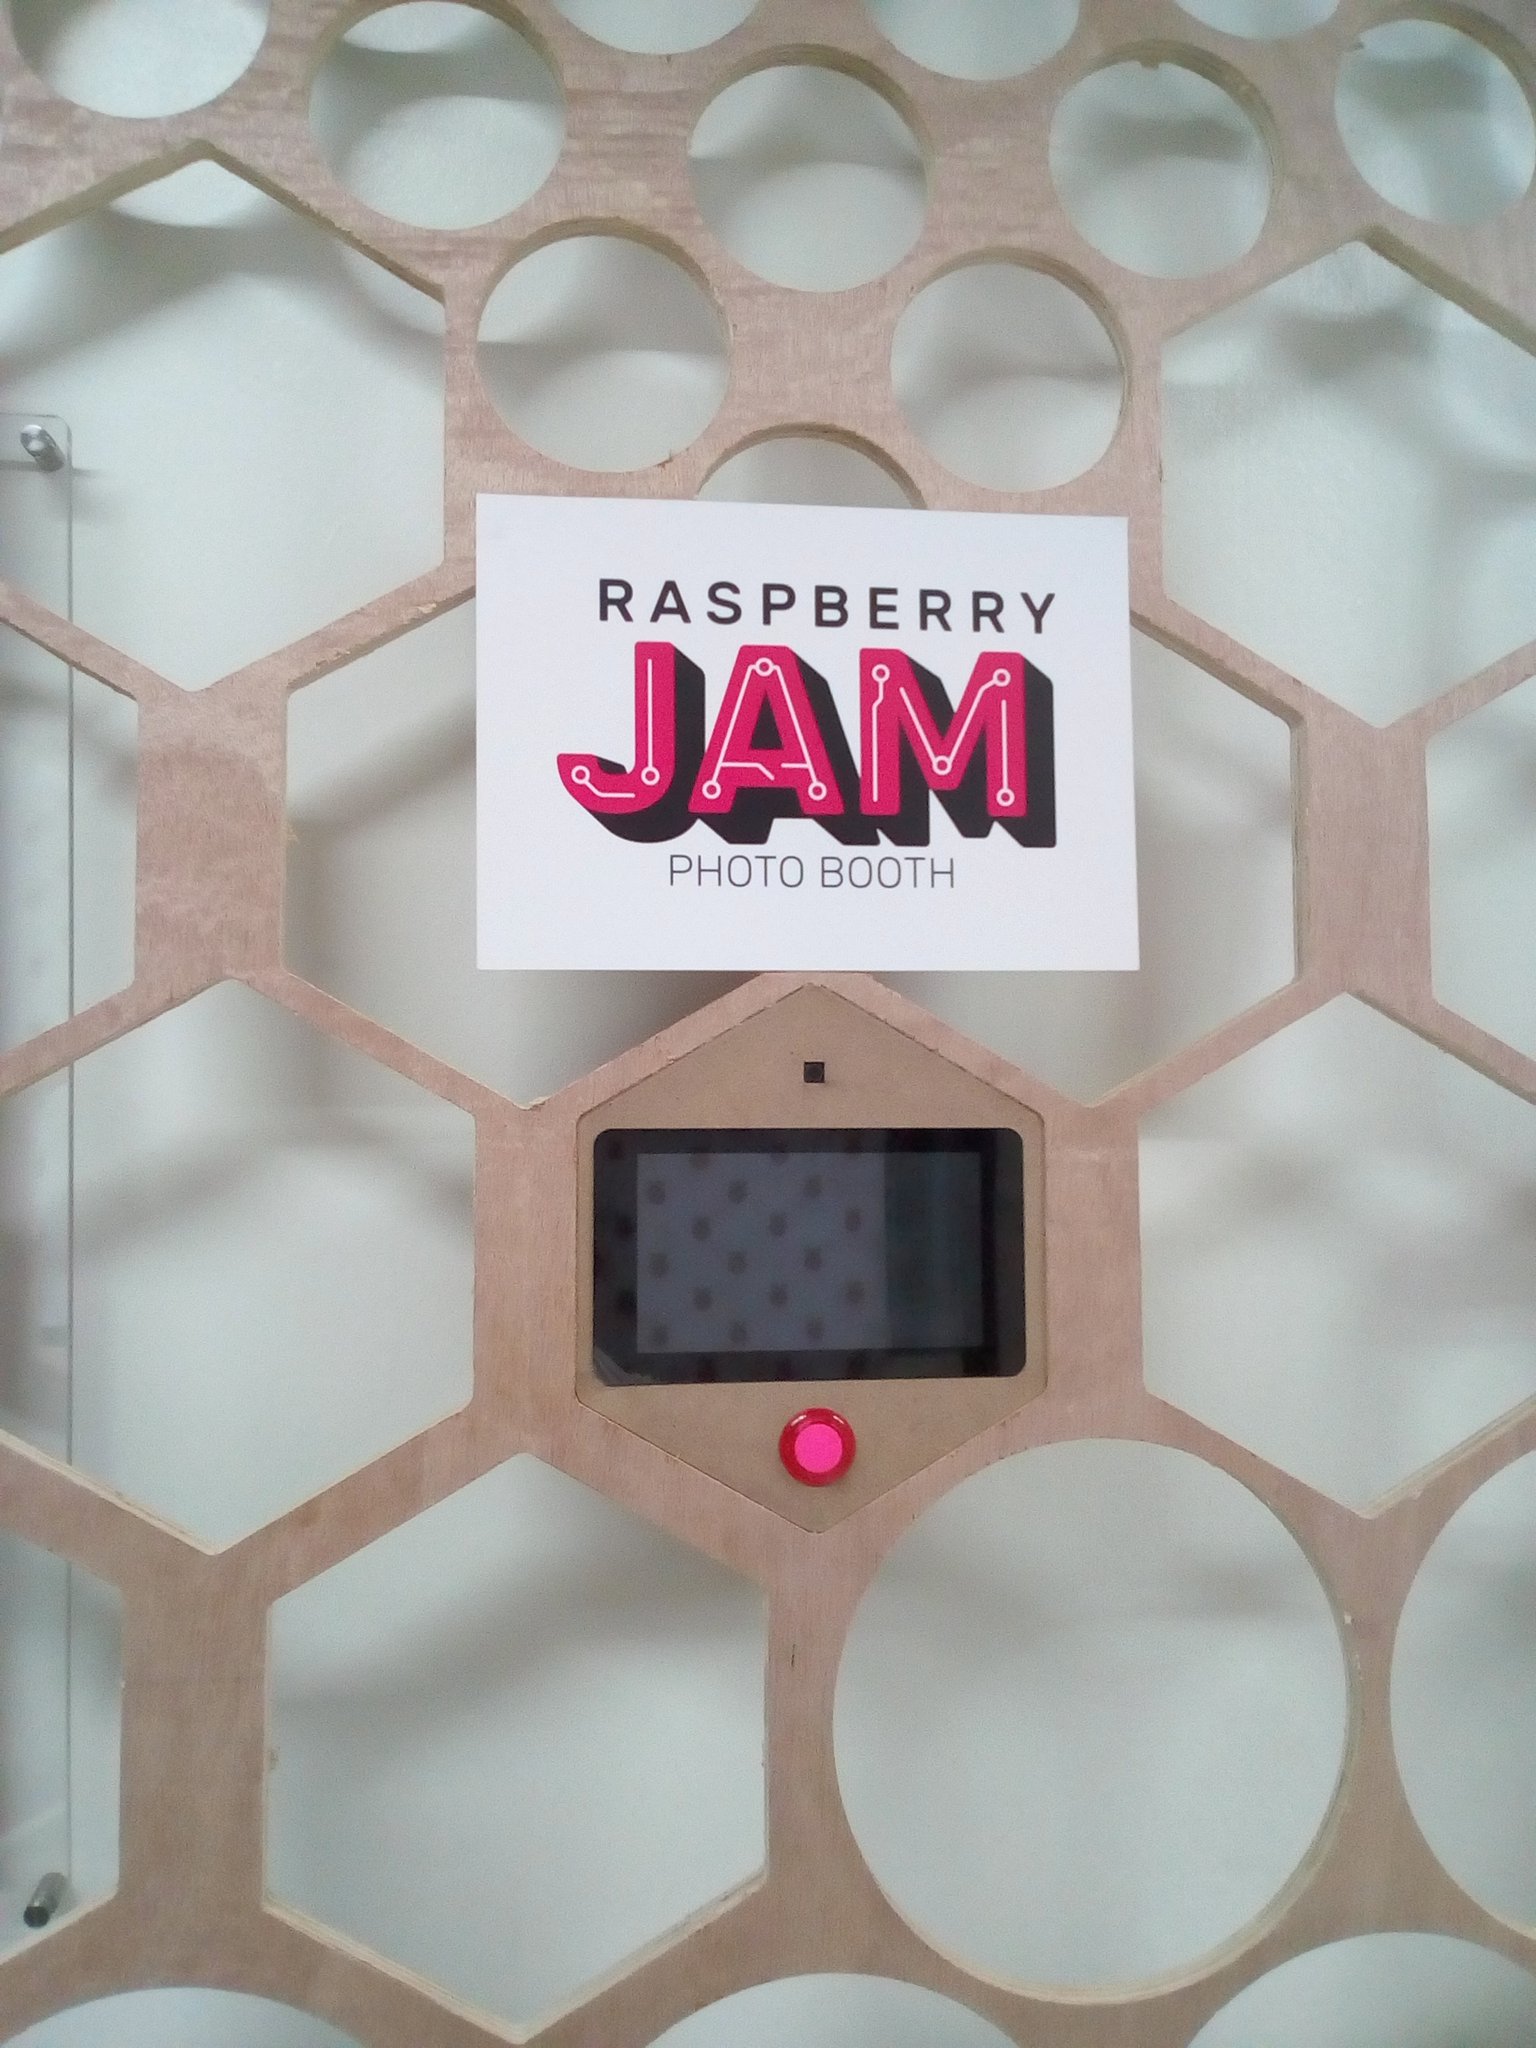 A Raspberry Pi-based photobooth created for last years Raspberry Jam Big Birthday Weekend